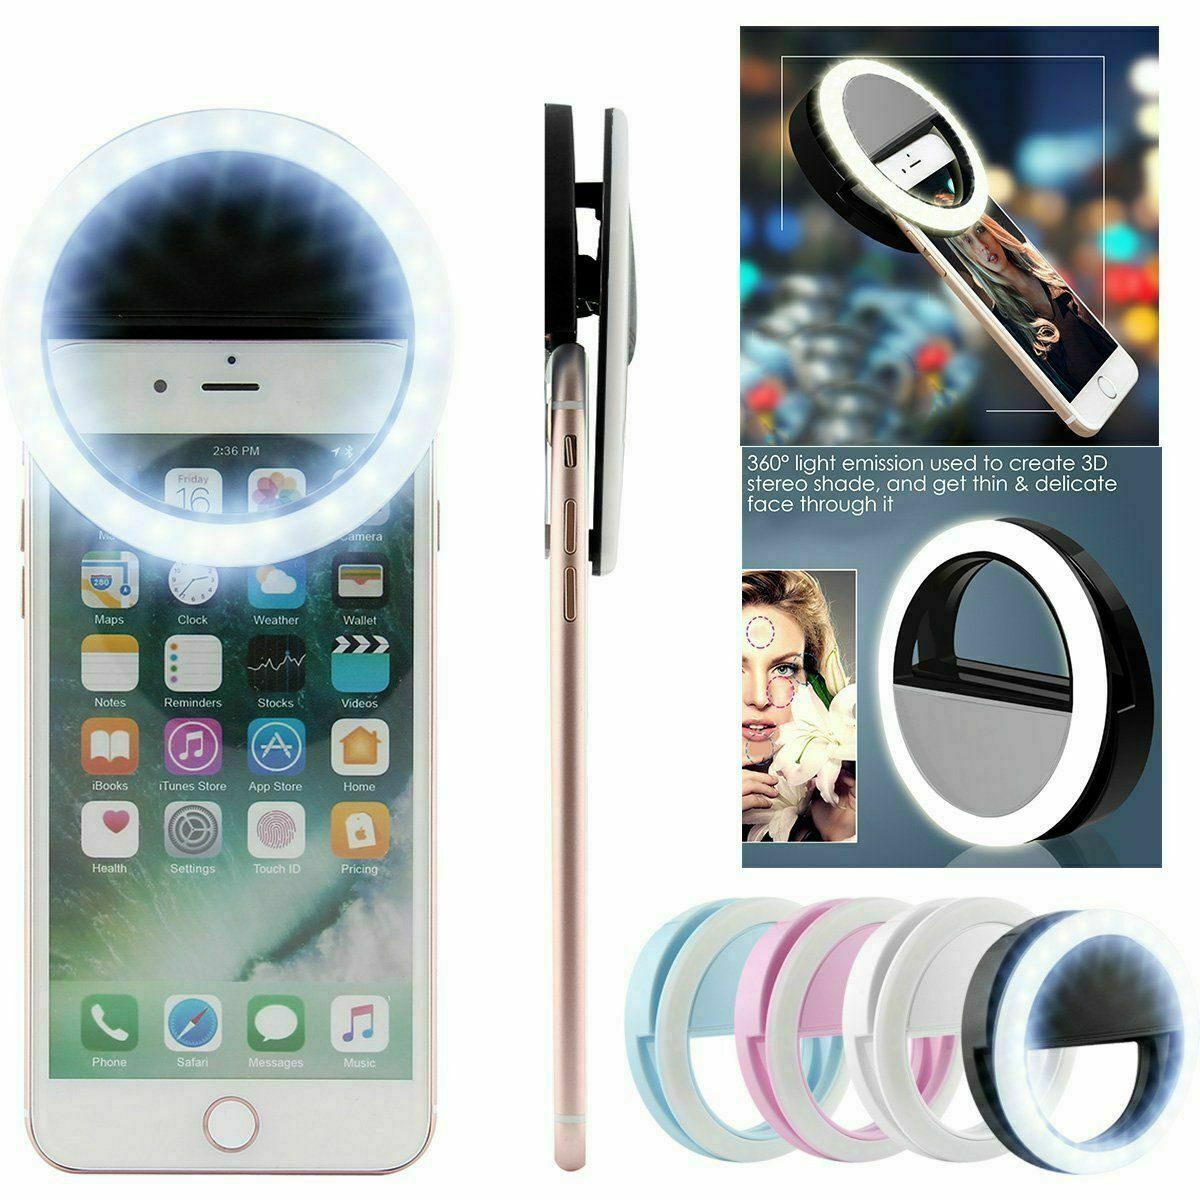 AUTOPkio Selfie Ring Light, 36 LED Light Ring USB Ricaricabile Regolabile 3 Livelli Luminosità con Clip per Smartphone Webcast Youtube Tiktok (azzurro)